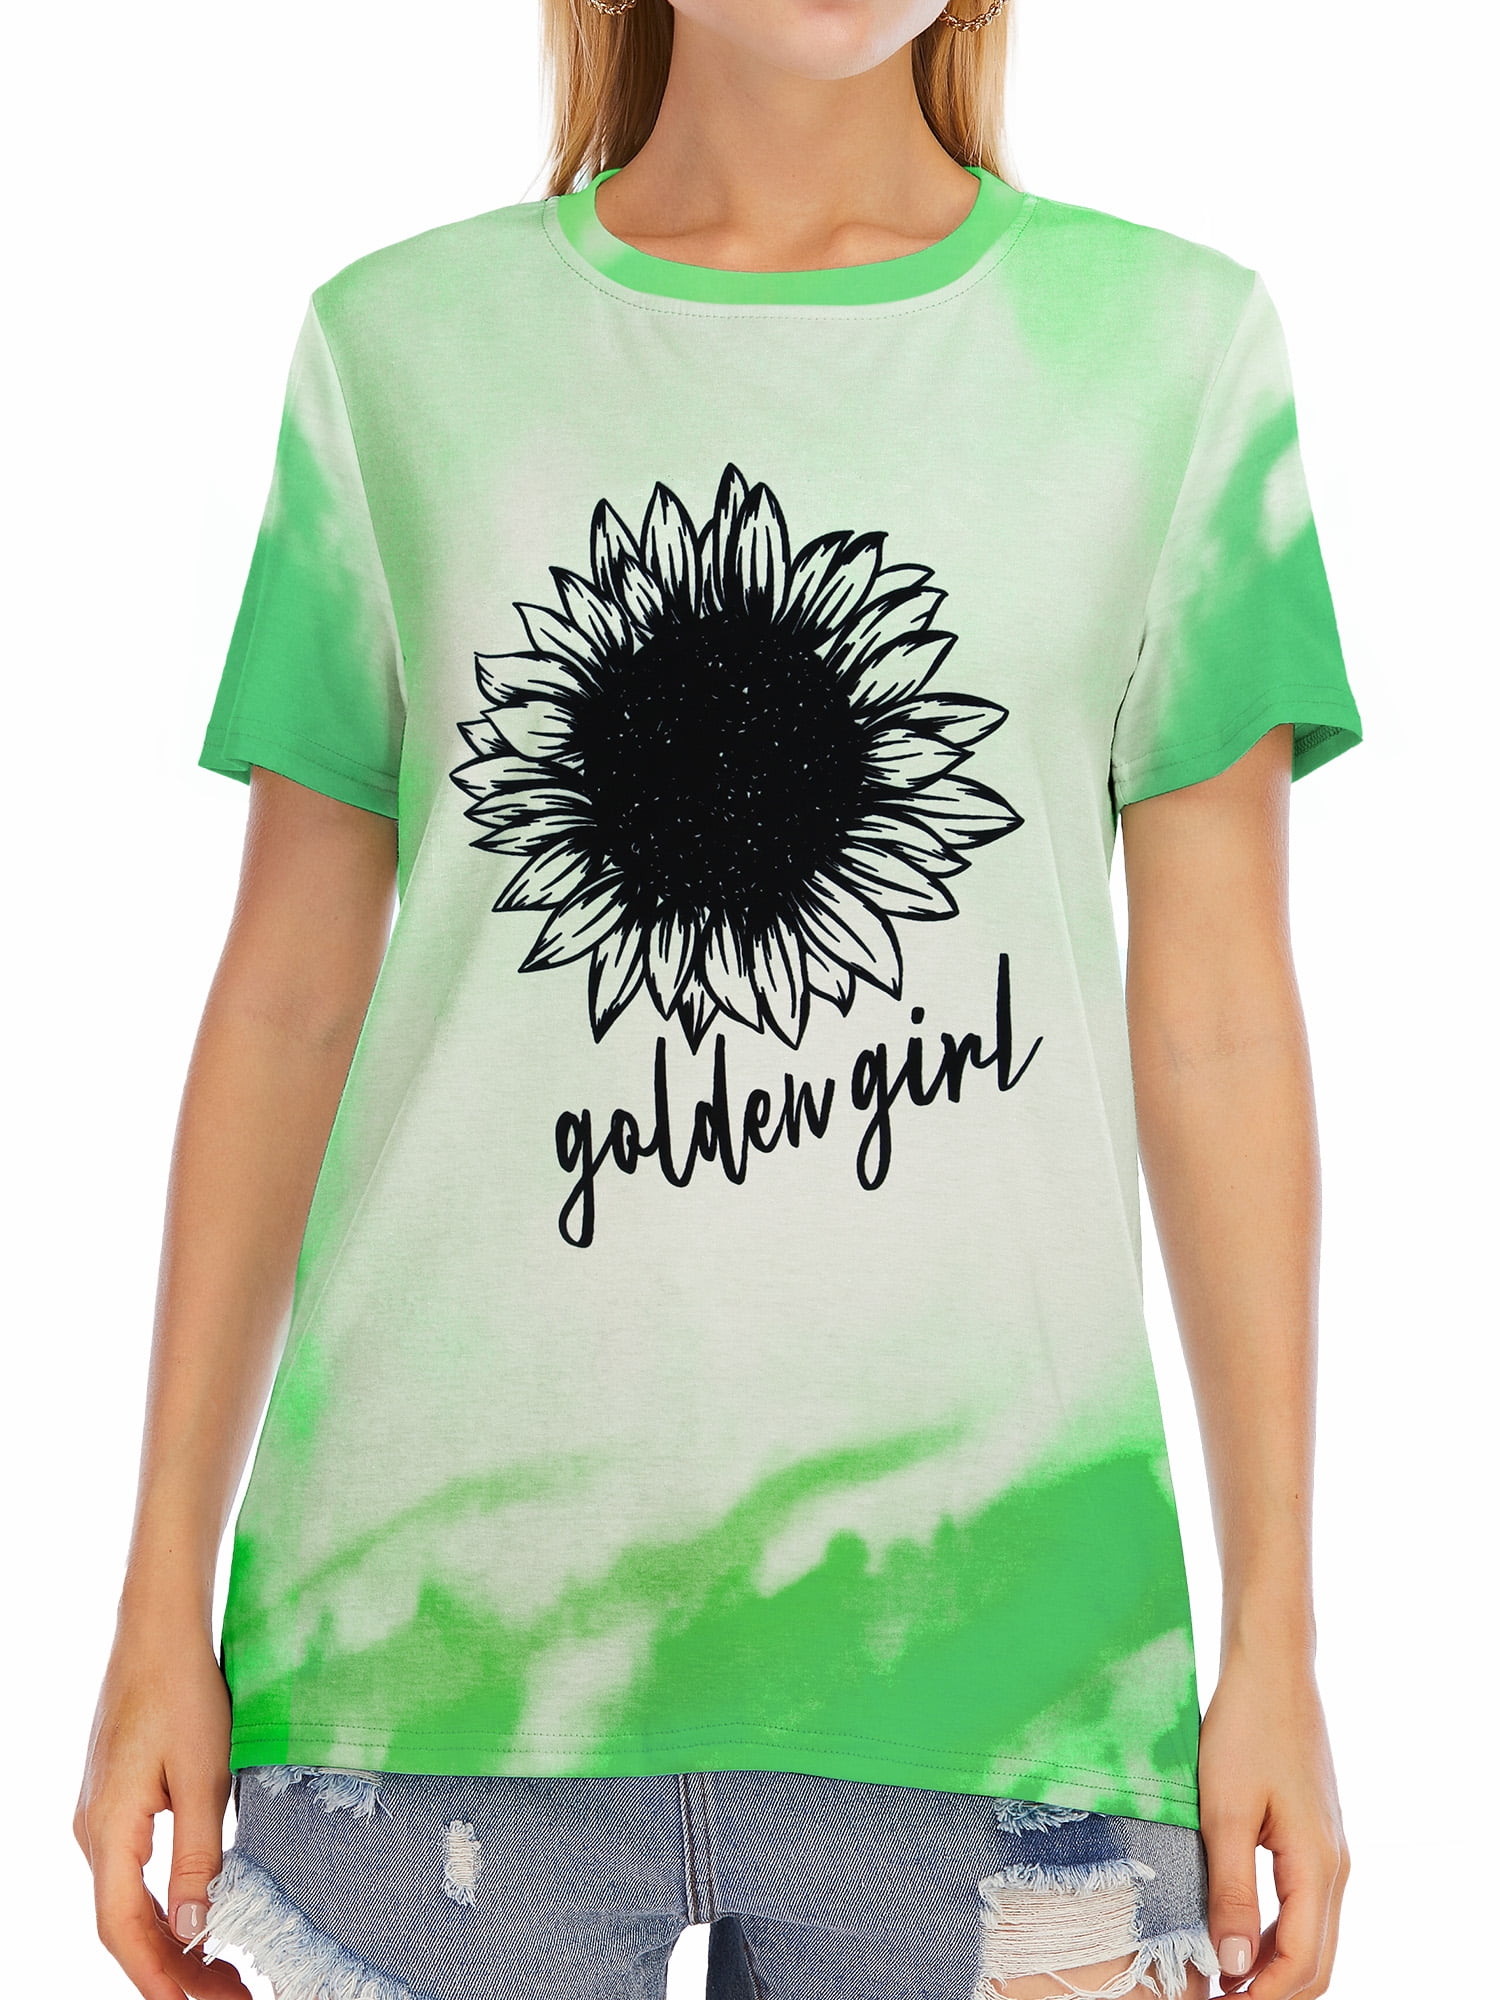 Jan STORE Womens Cute Summer T-Shirt Dandelion Funny Short Sleeve O Neck Sunflower Graphic Tees Tops Tshirts